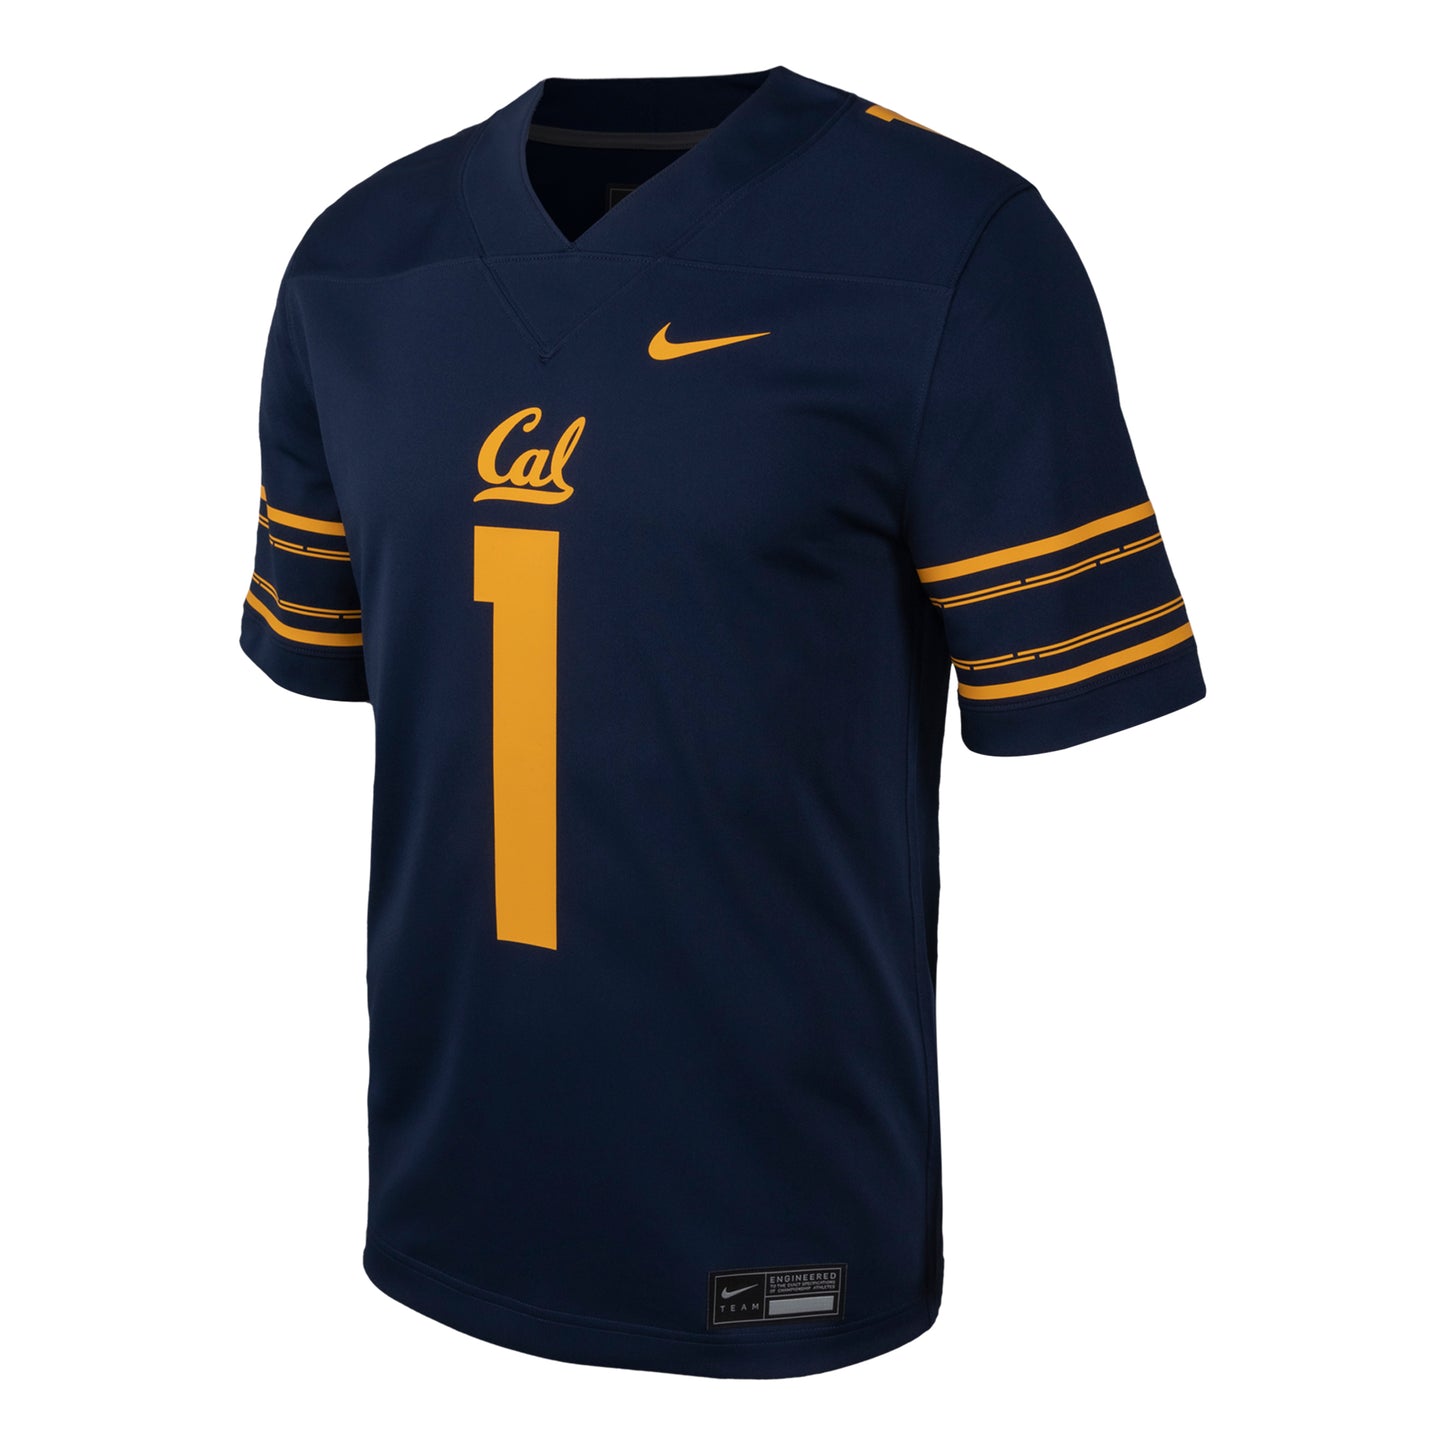 University of California Berkeley Cal Nike football jersey-Navy-Shop College Wear